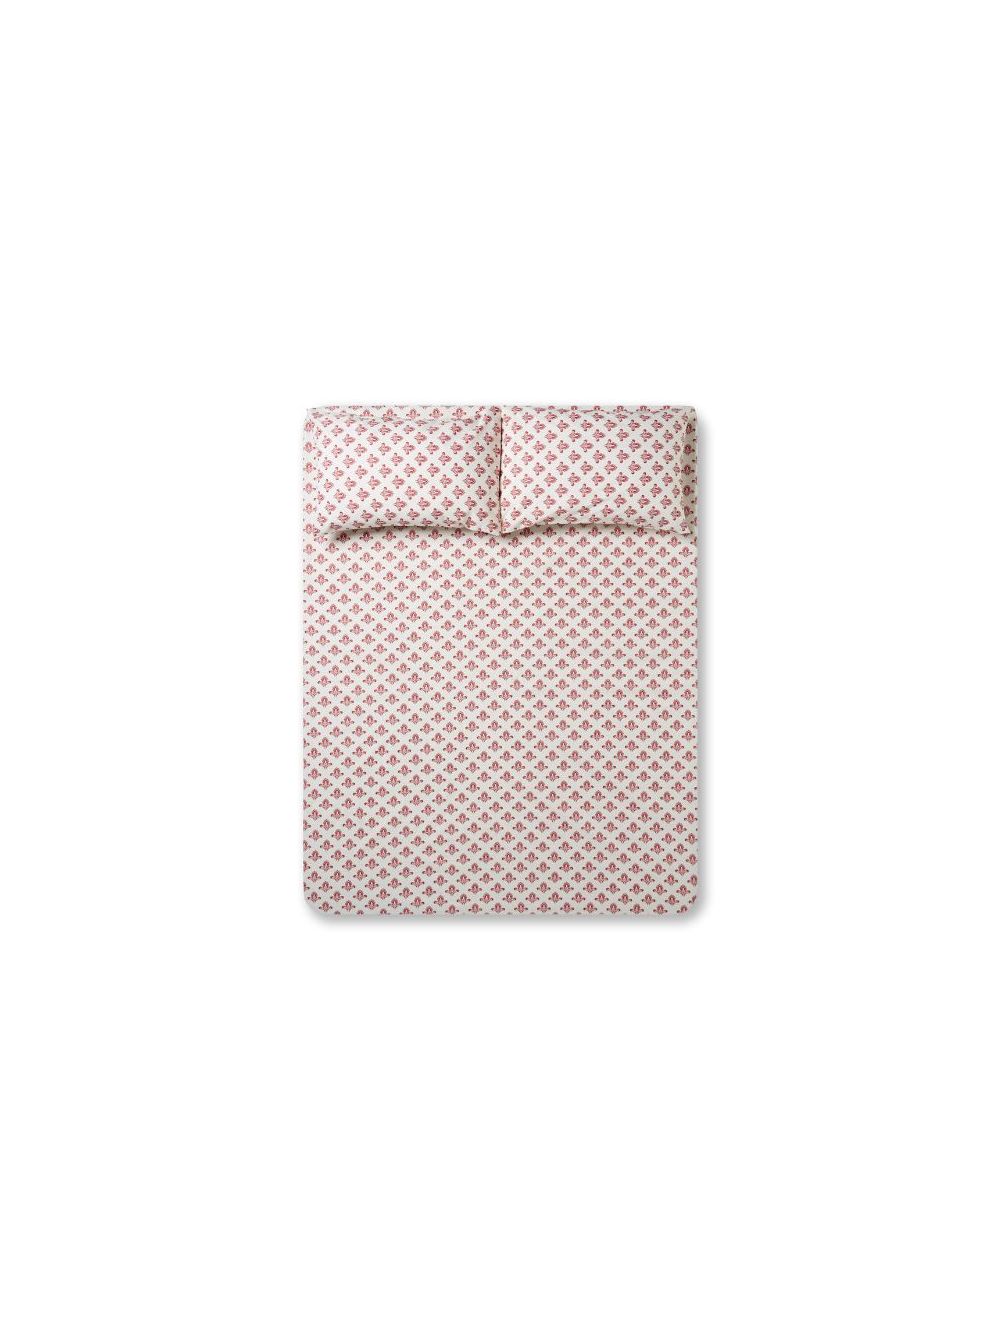 Rishahome 3 Piece Printed 180 TC Cotton Bedsheet Set Queen Size, (1 Bedsheet + 2 Pillow Cases) Flower Buds-4BSPCQ1092